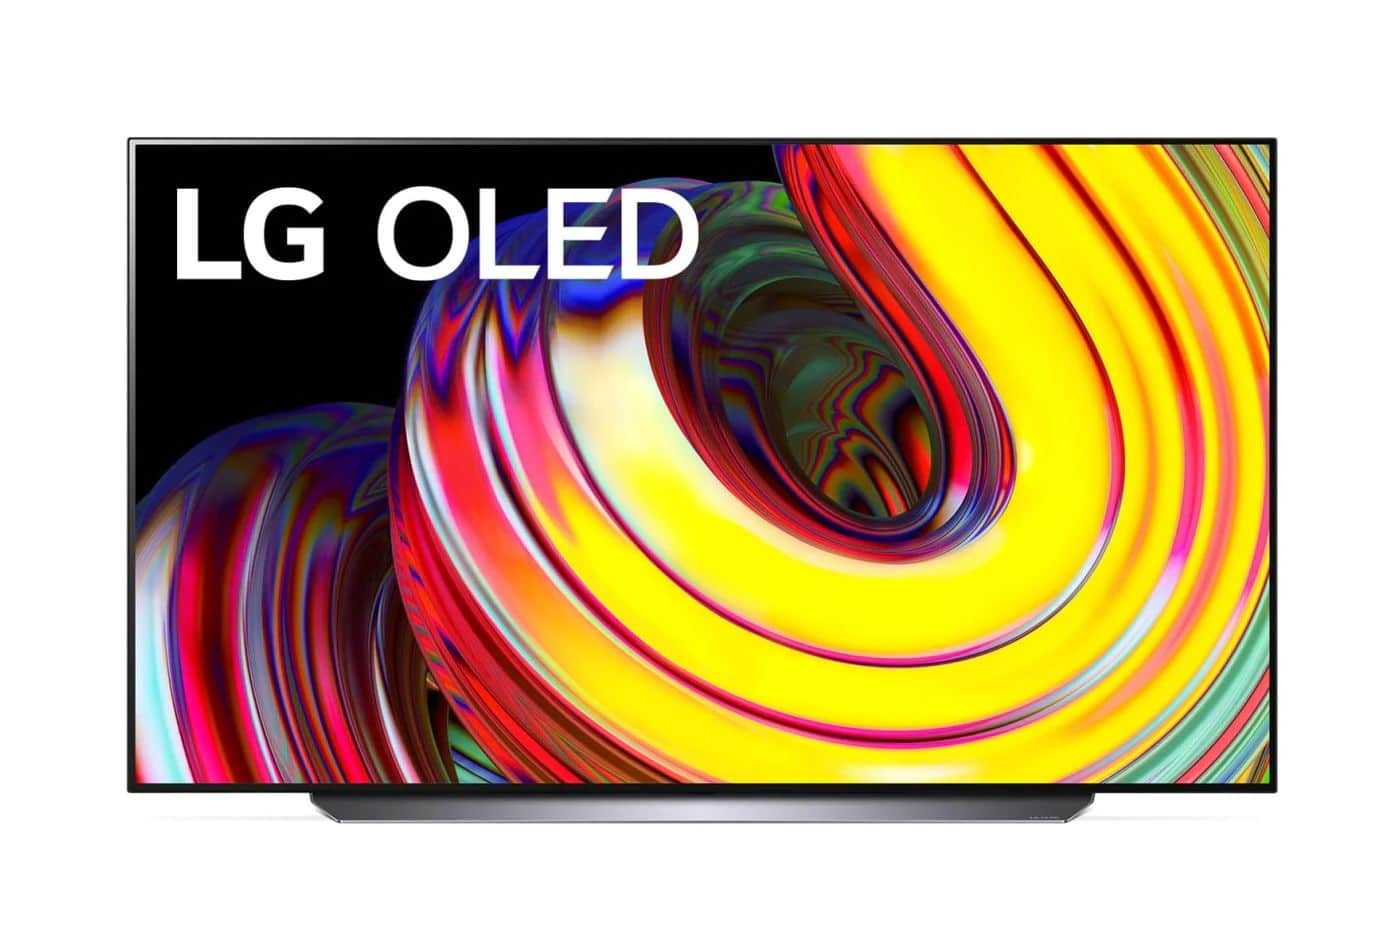 LG Smart TV OLED CS Black Friday